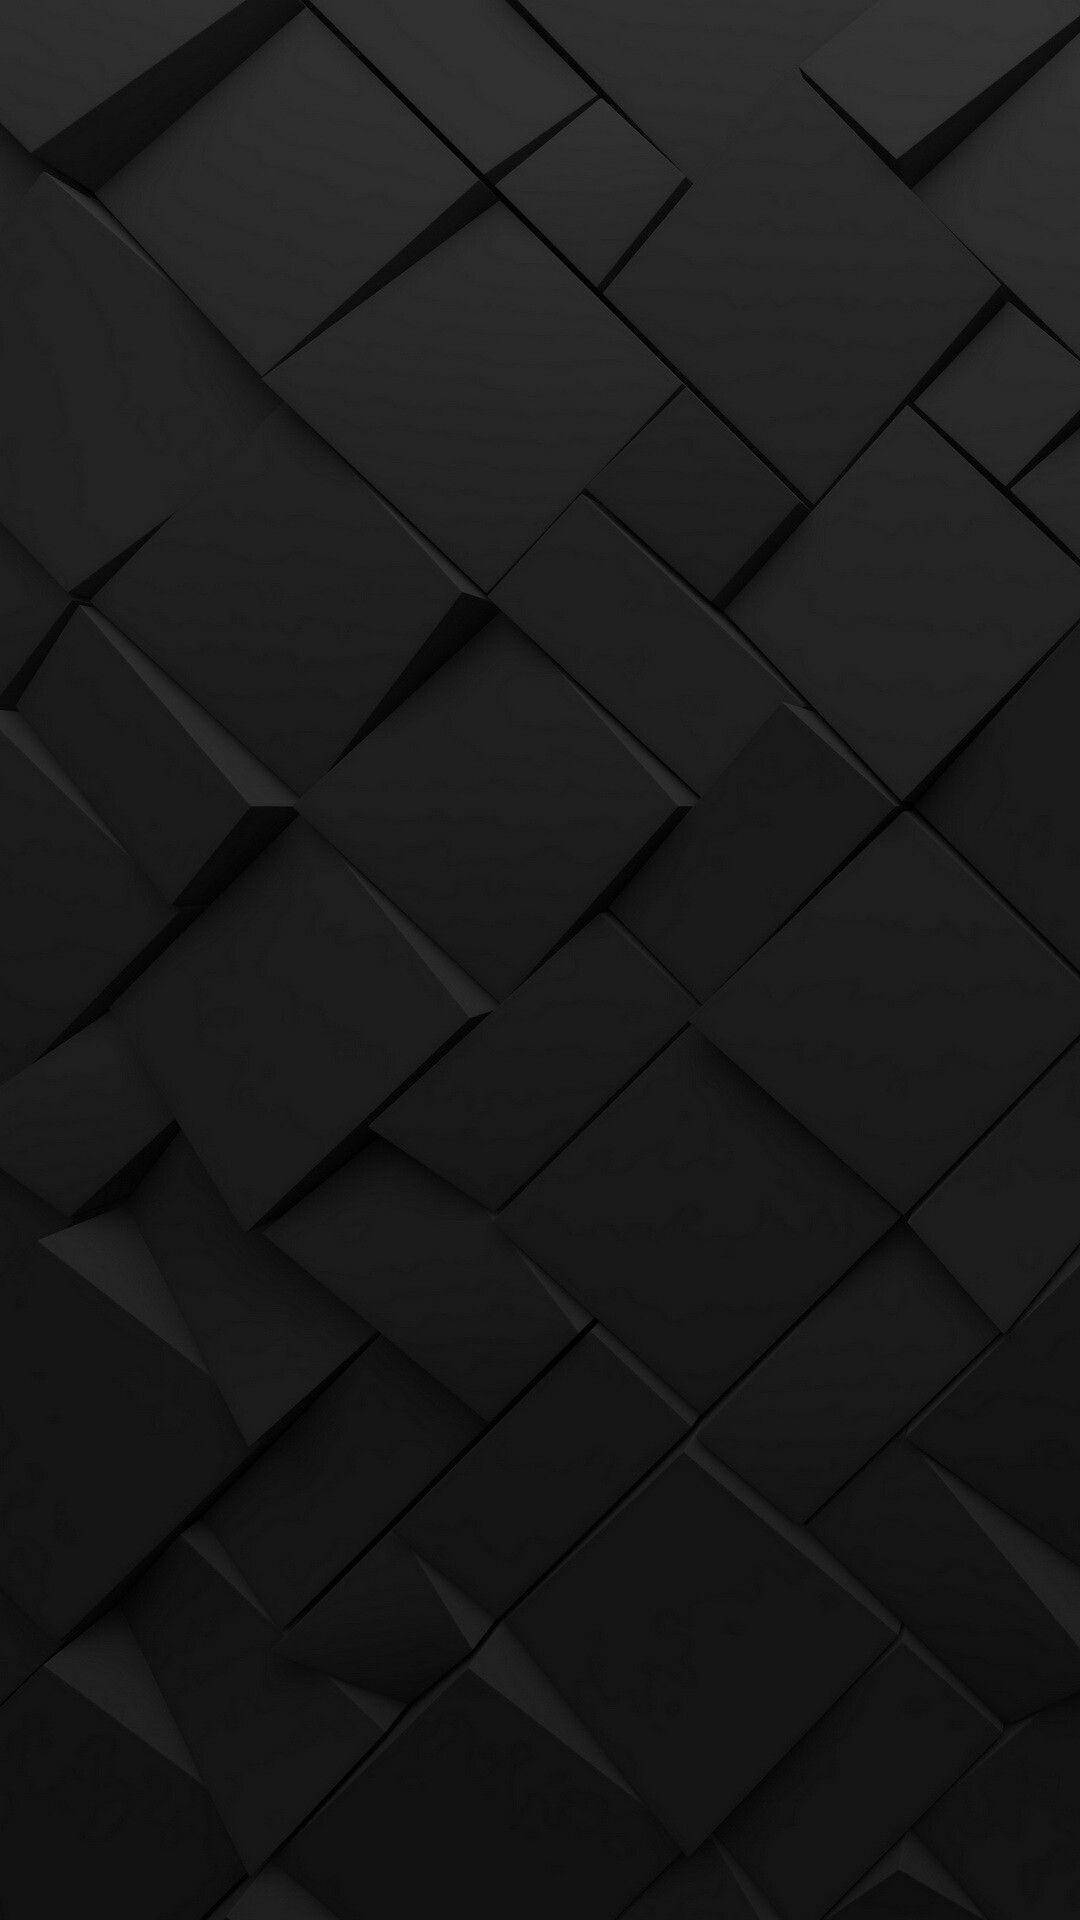 Dark Phone Uneven Cubes Wallpaper